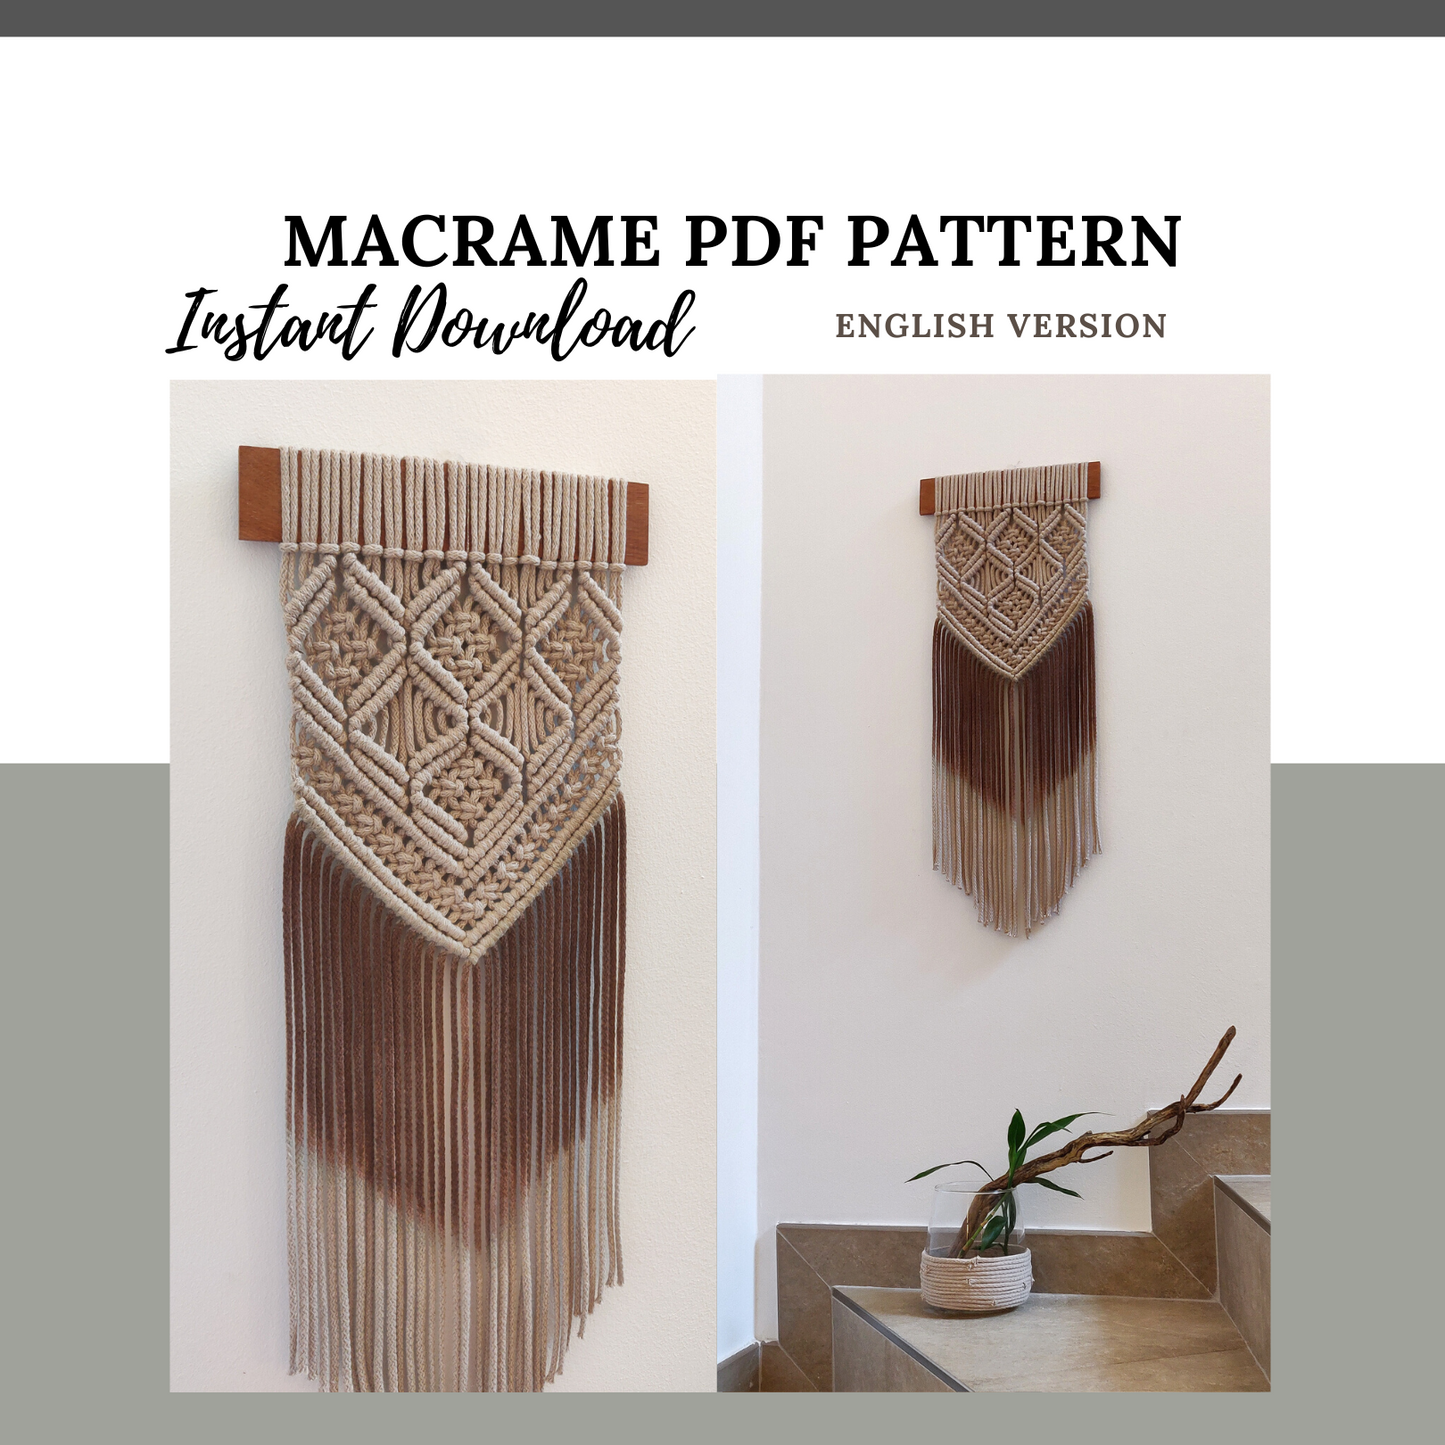 Macrame Wall Hanging Pattern "Venice"- PDF Download - ENGLISH